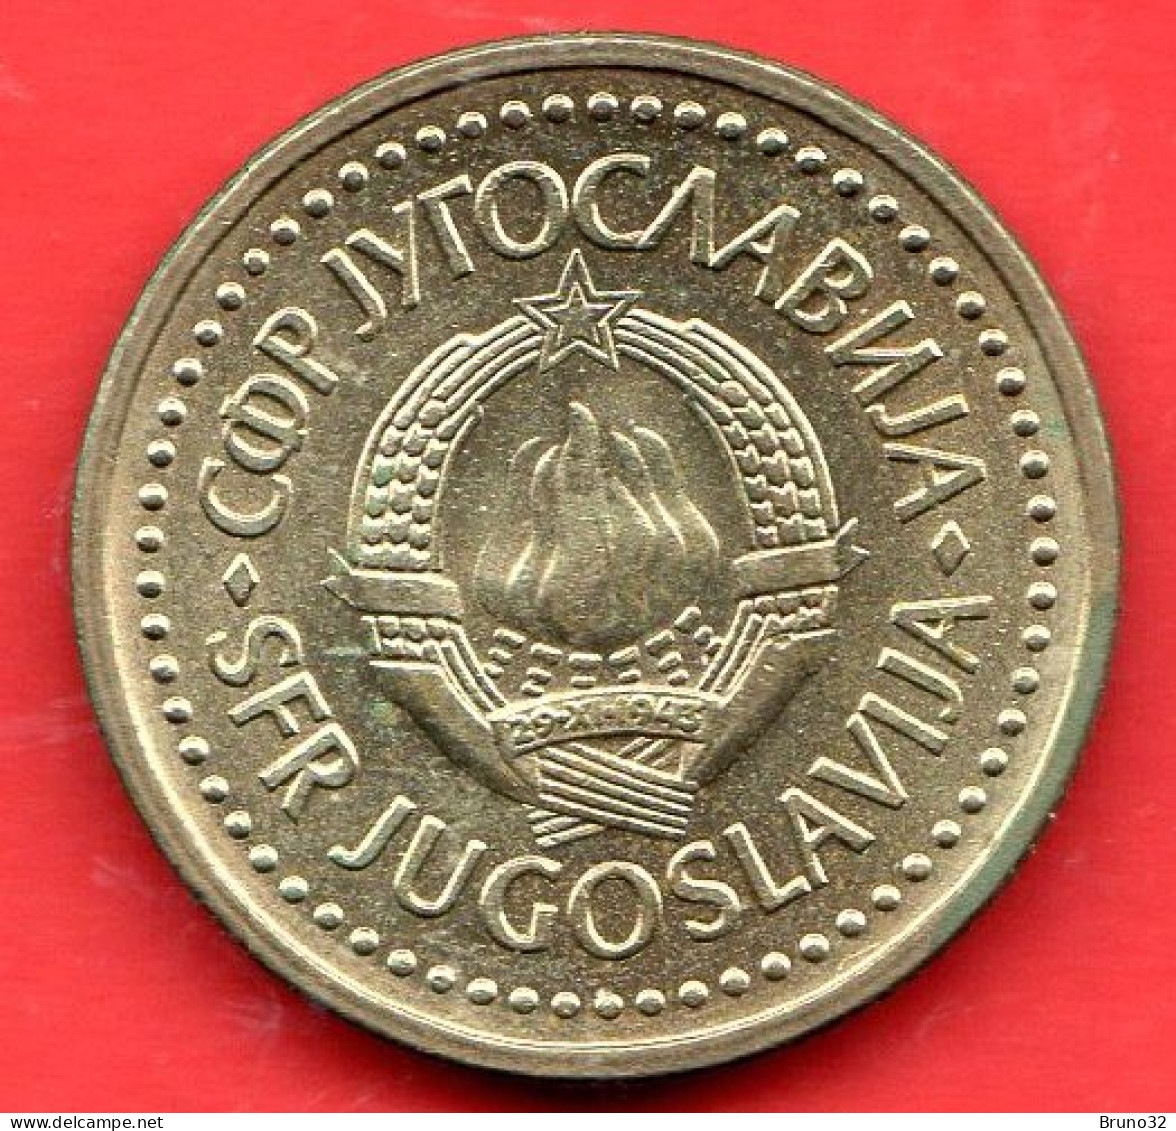 Jugoslavia - Jugoslavija - Yugoslavia - 1983 - 1 Dinar - QFDC/aUNC - Come Da Foto - Yougoslavie